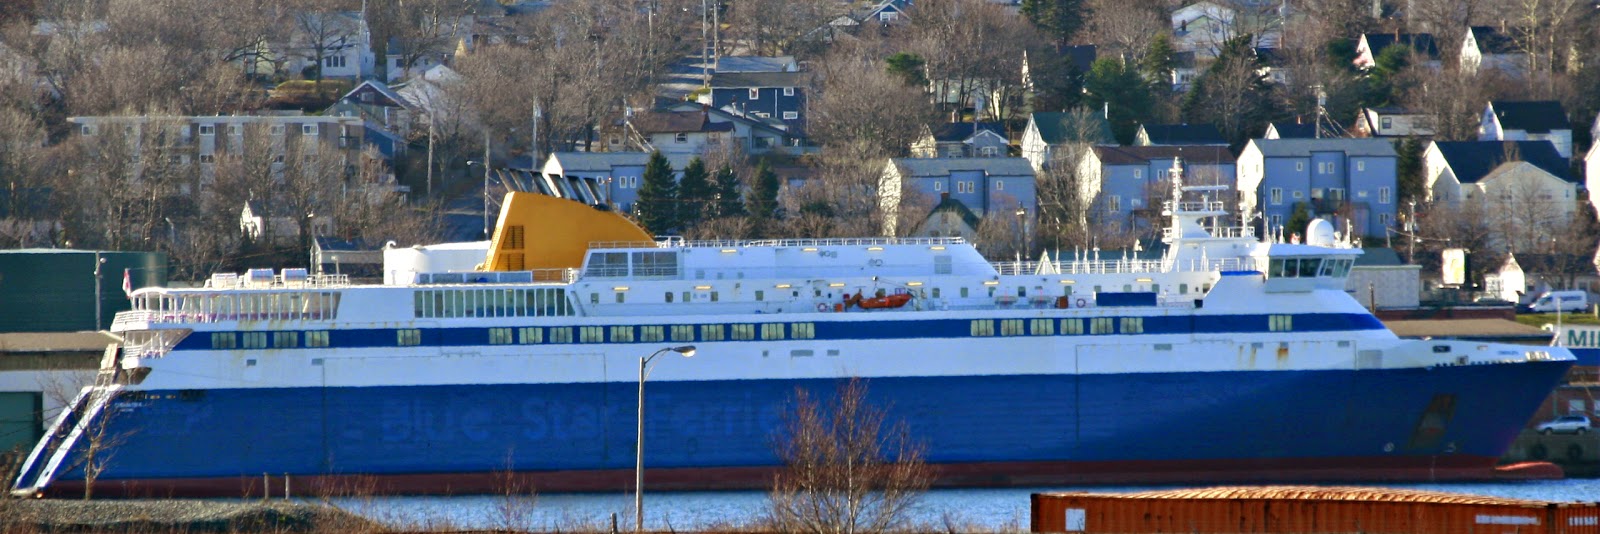 MV Fundy Rose - Wikipedia